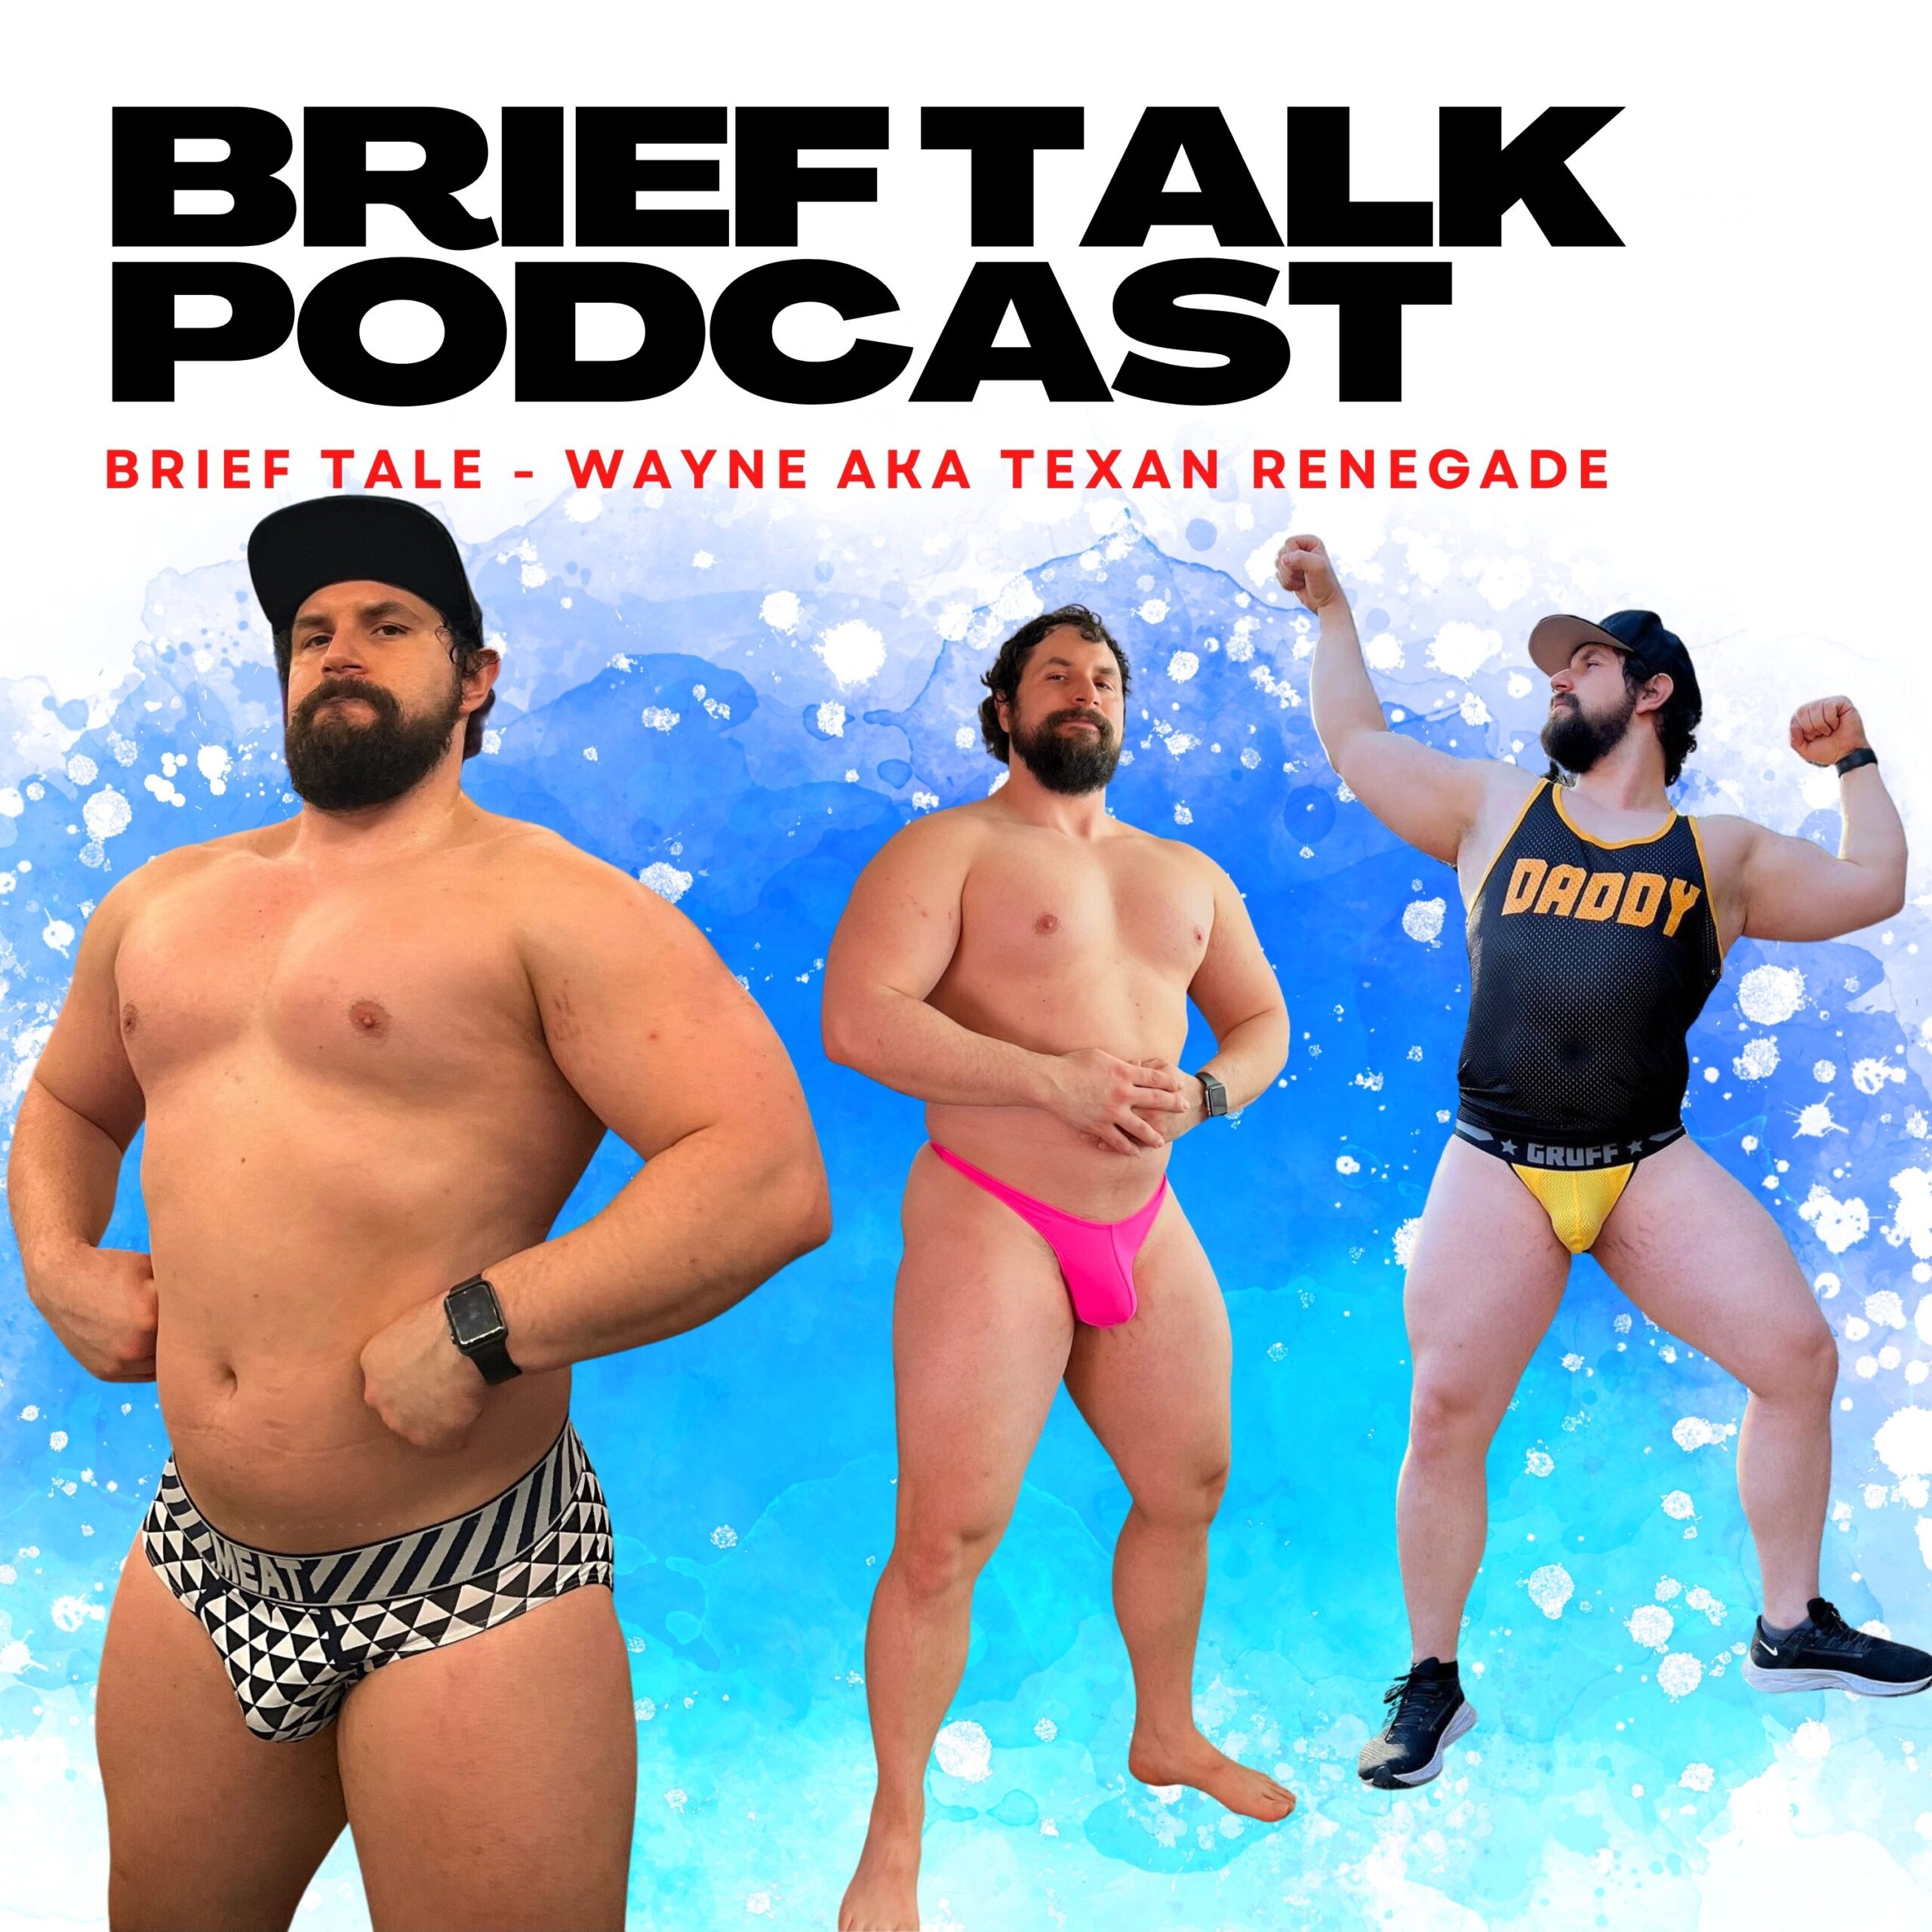 Brief Talk Podcast – Brief Tale – Wayne aka Texan Renegade – Underwear News  Briefs